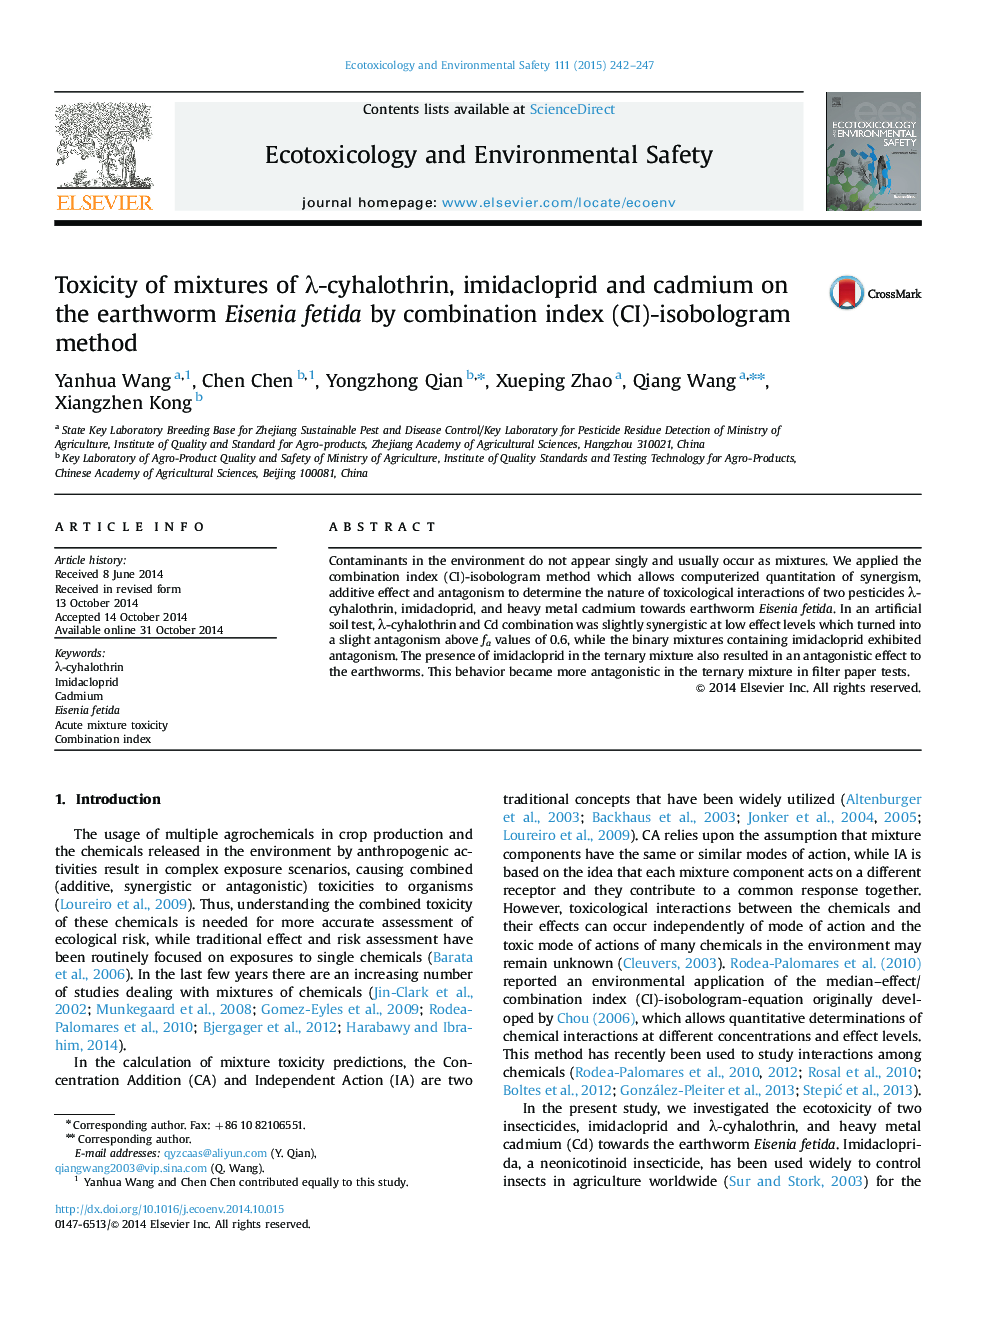 Toxicity of mixtures of λ-cyhalothrin, imidacloprid and cadmium on the earthworm Eisenia fetida by combination index (CI)-isobologram method